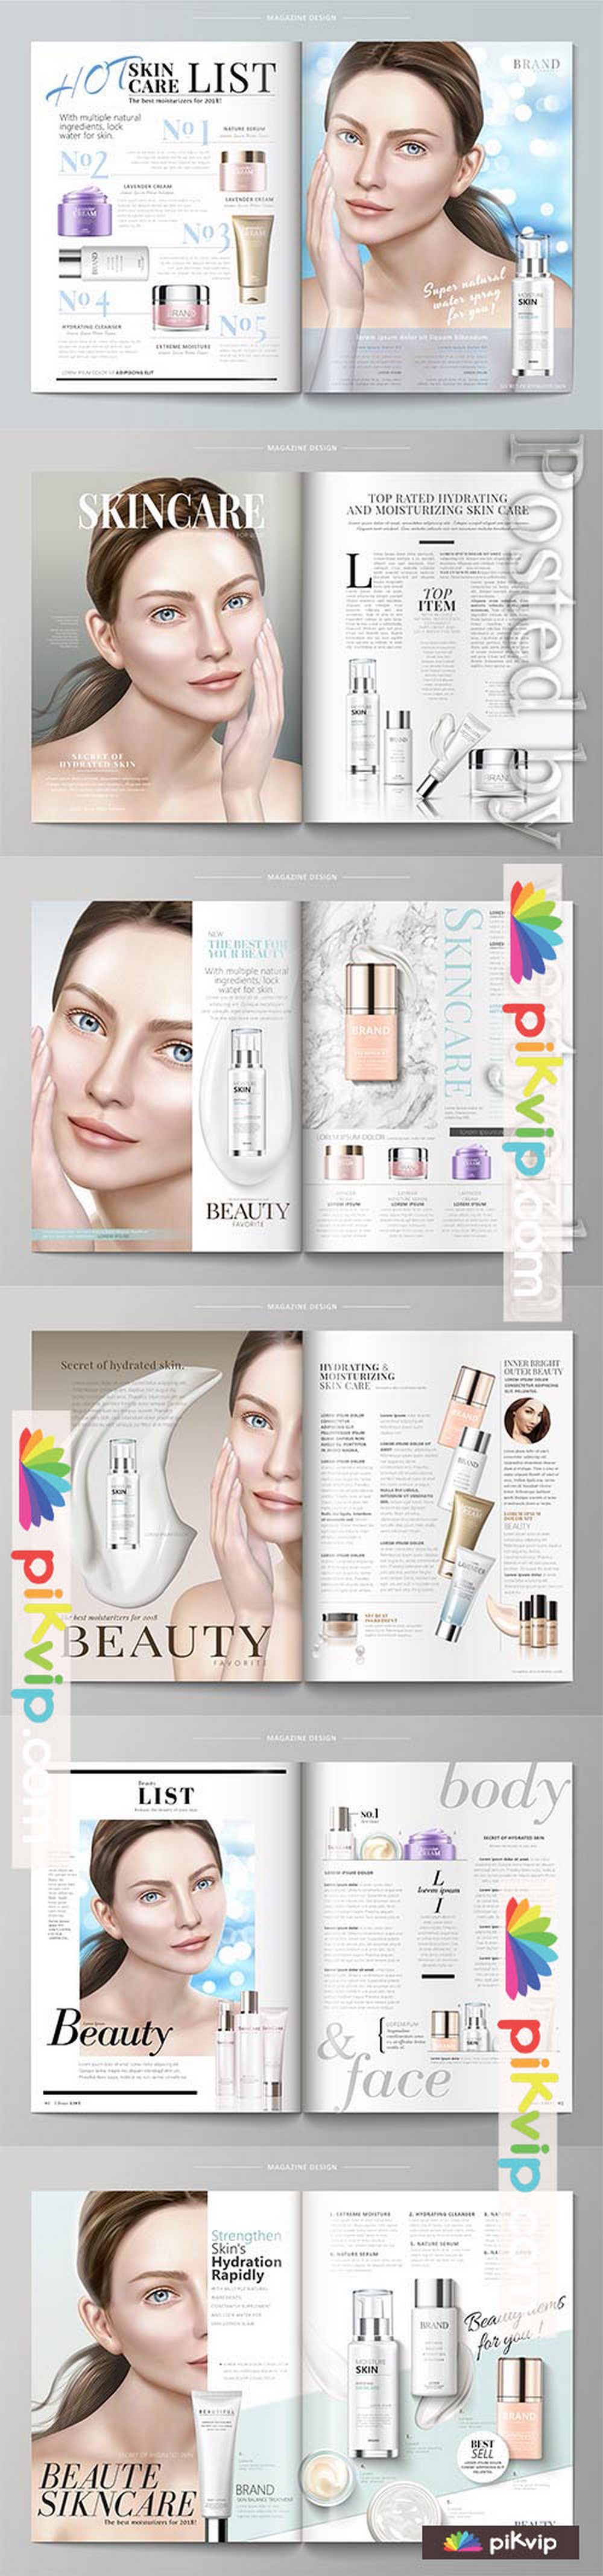 Elegant skin care magazine vector template